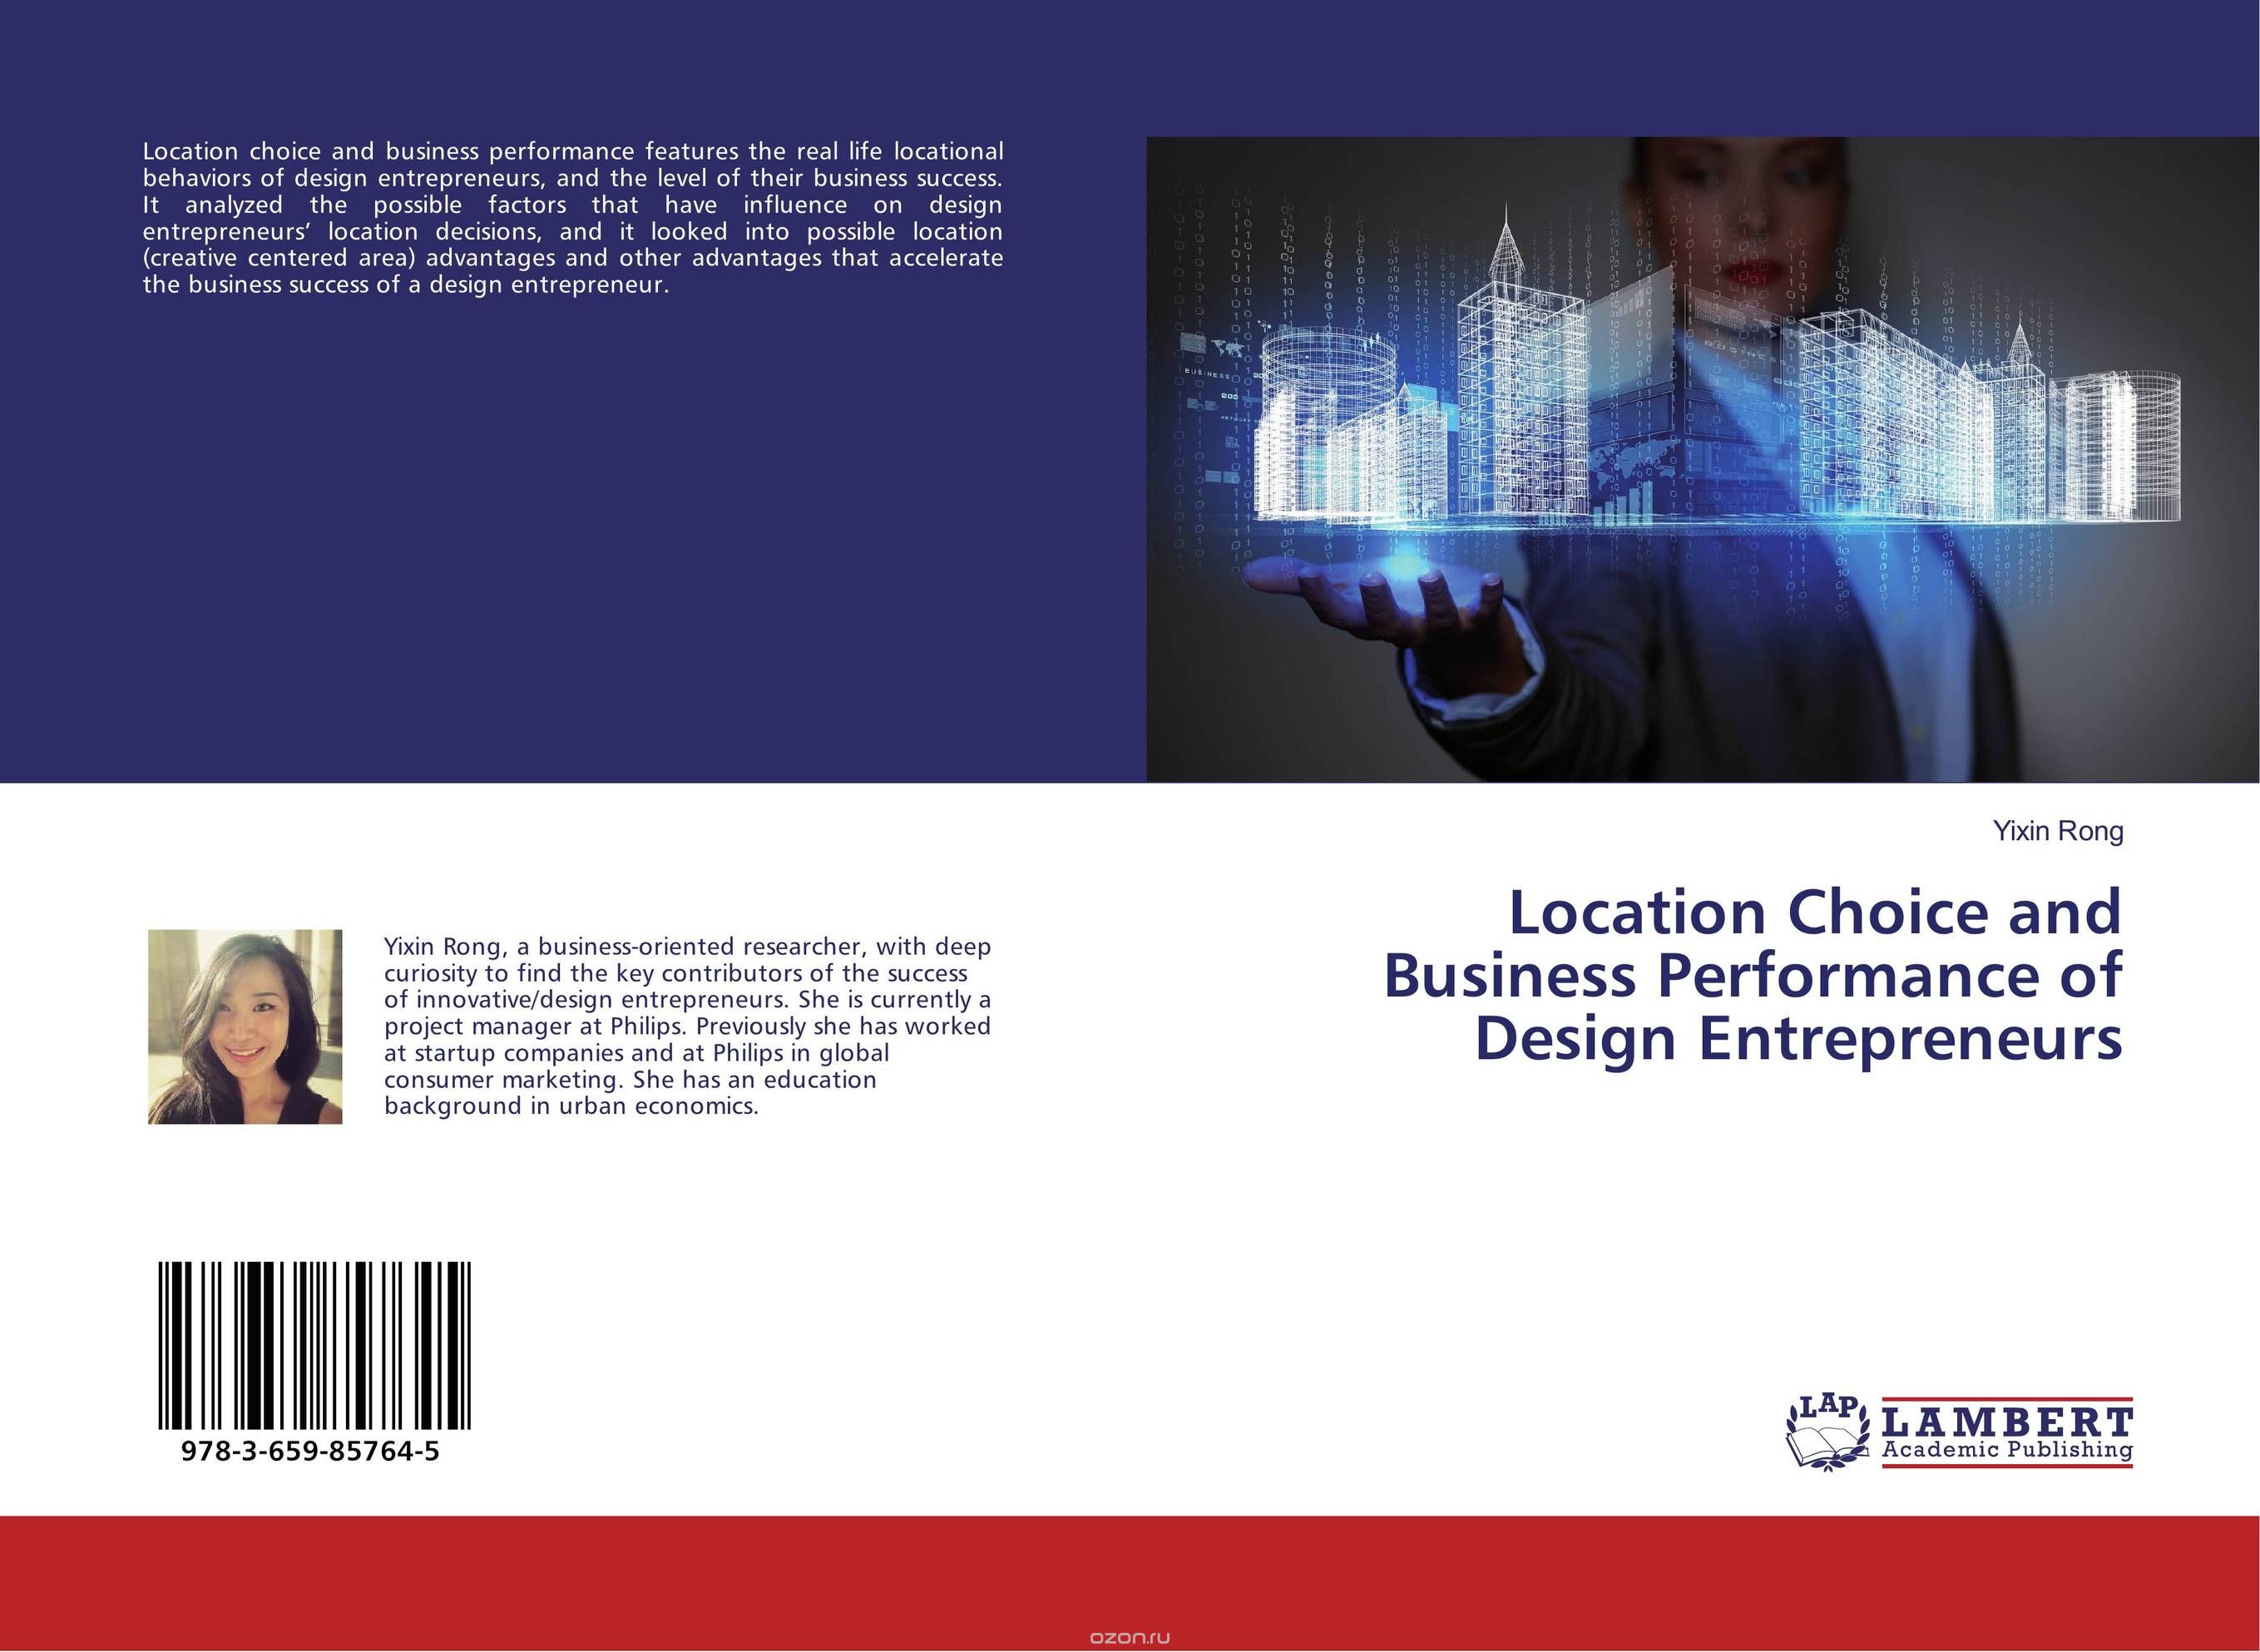 Скачать книгу "Location Choice and Business Performance of Design Entrepreneurs"